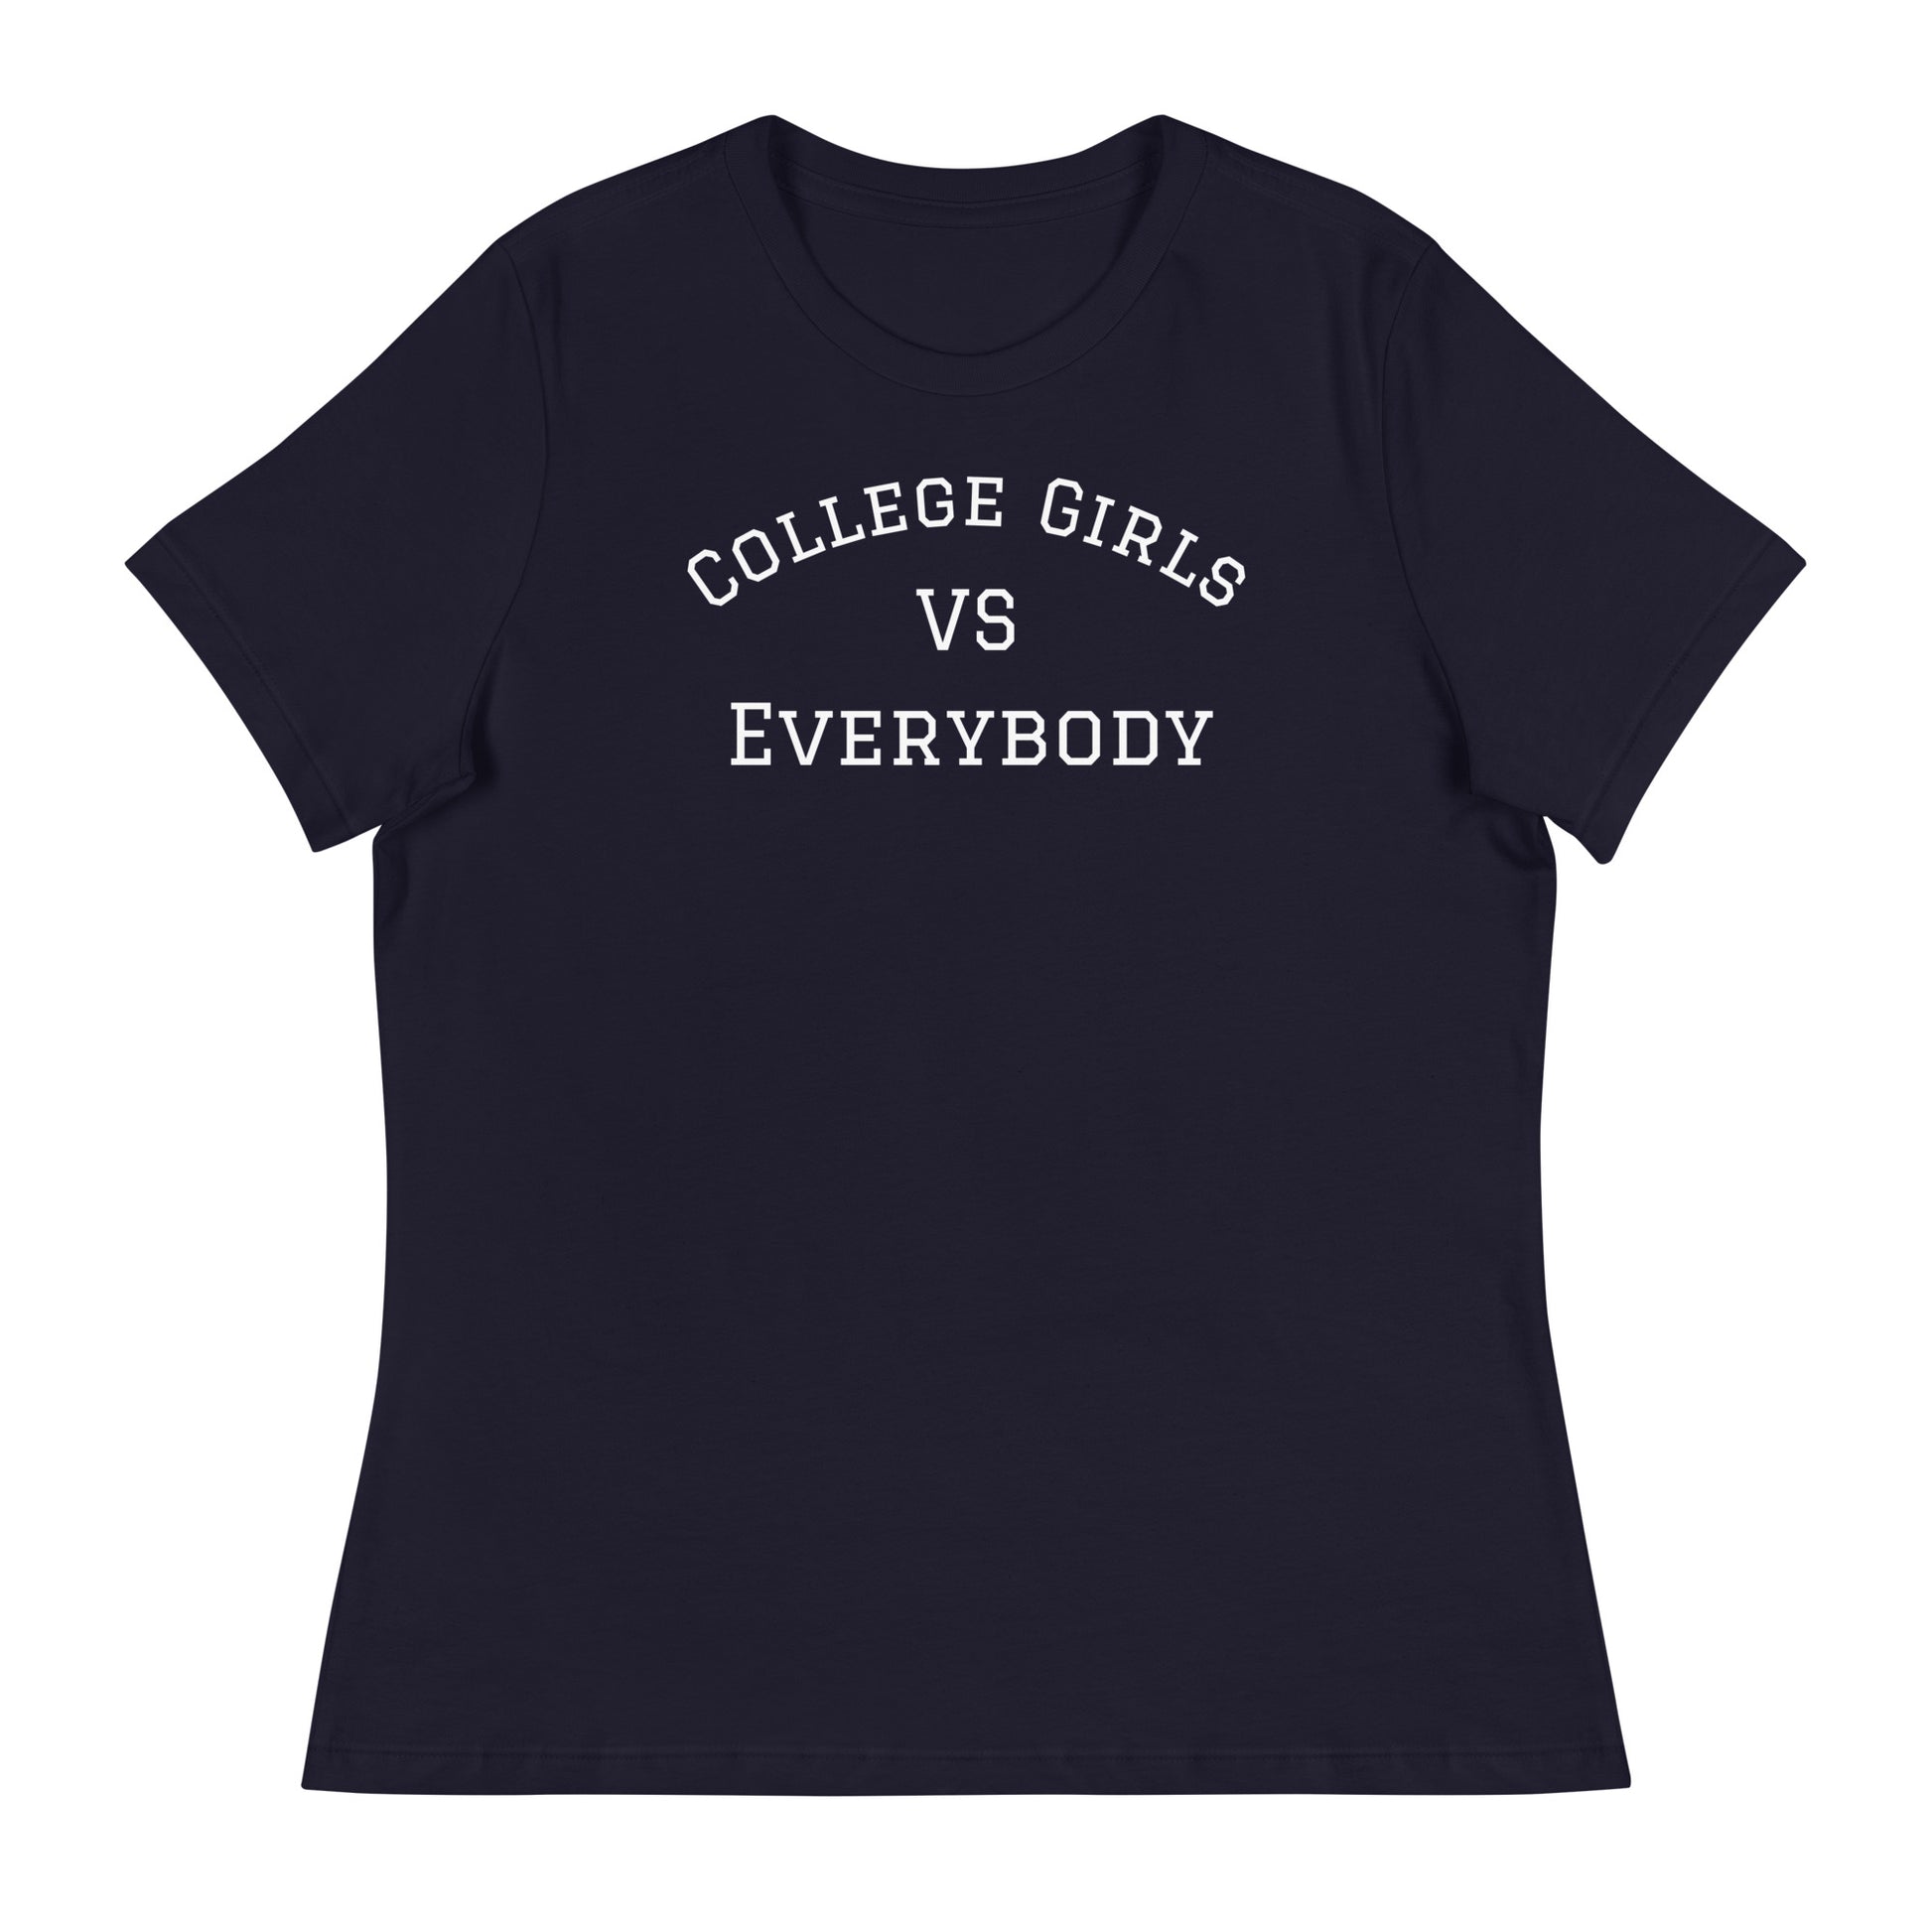 Best women's short sleeve college-casual stylish navy tee shirt that celebrates college girls